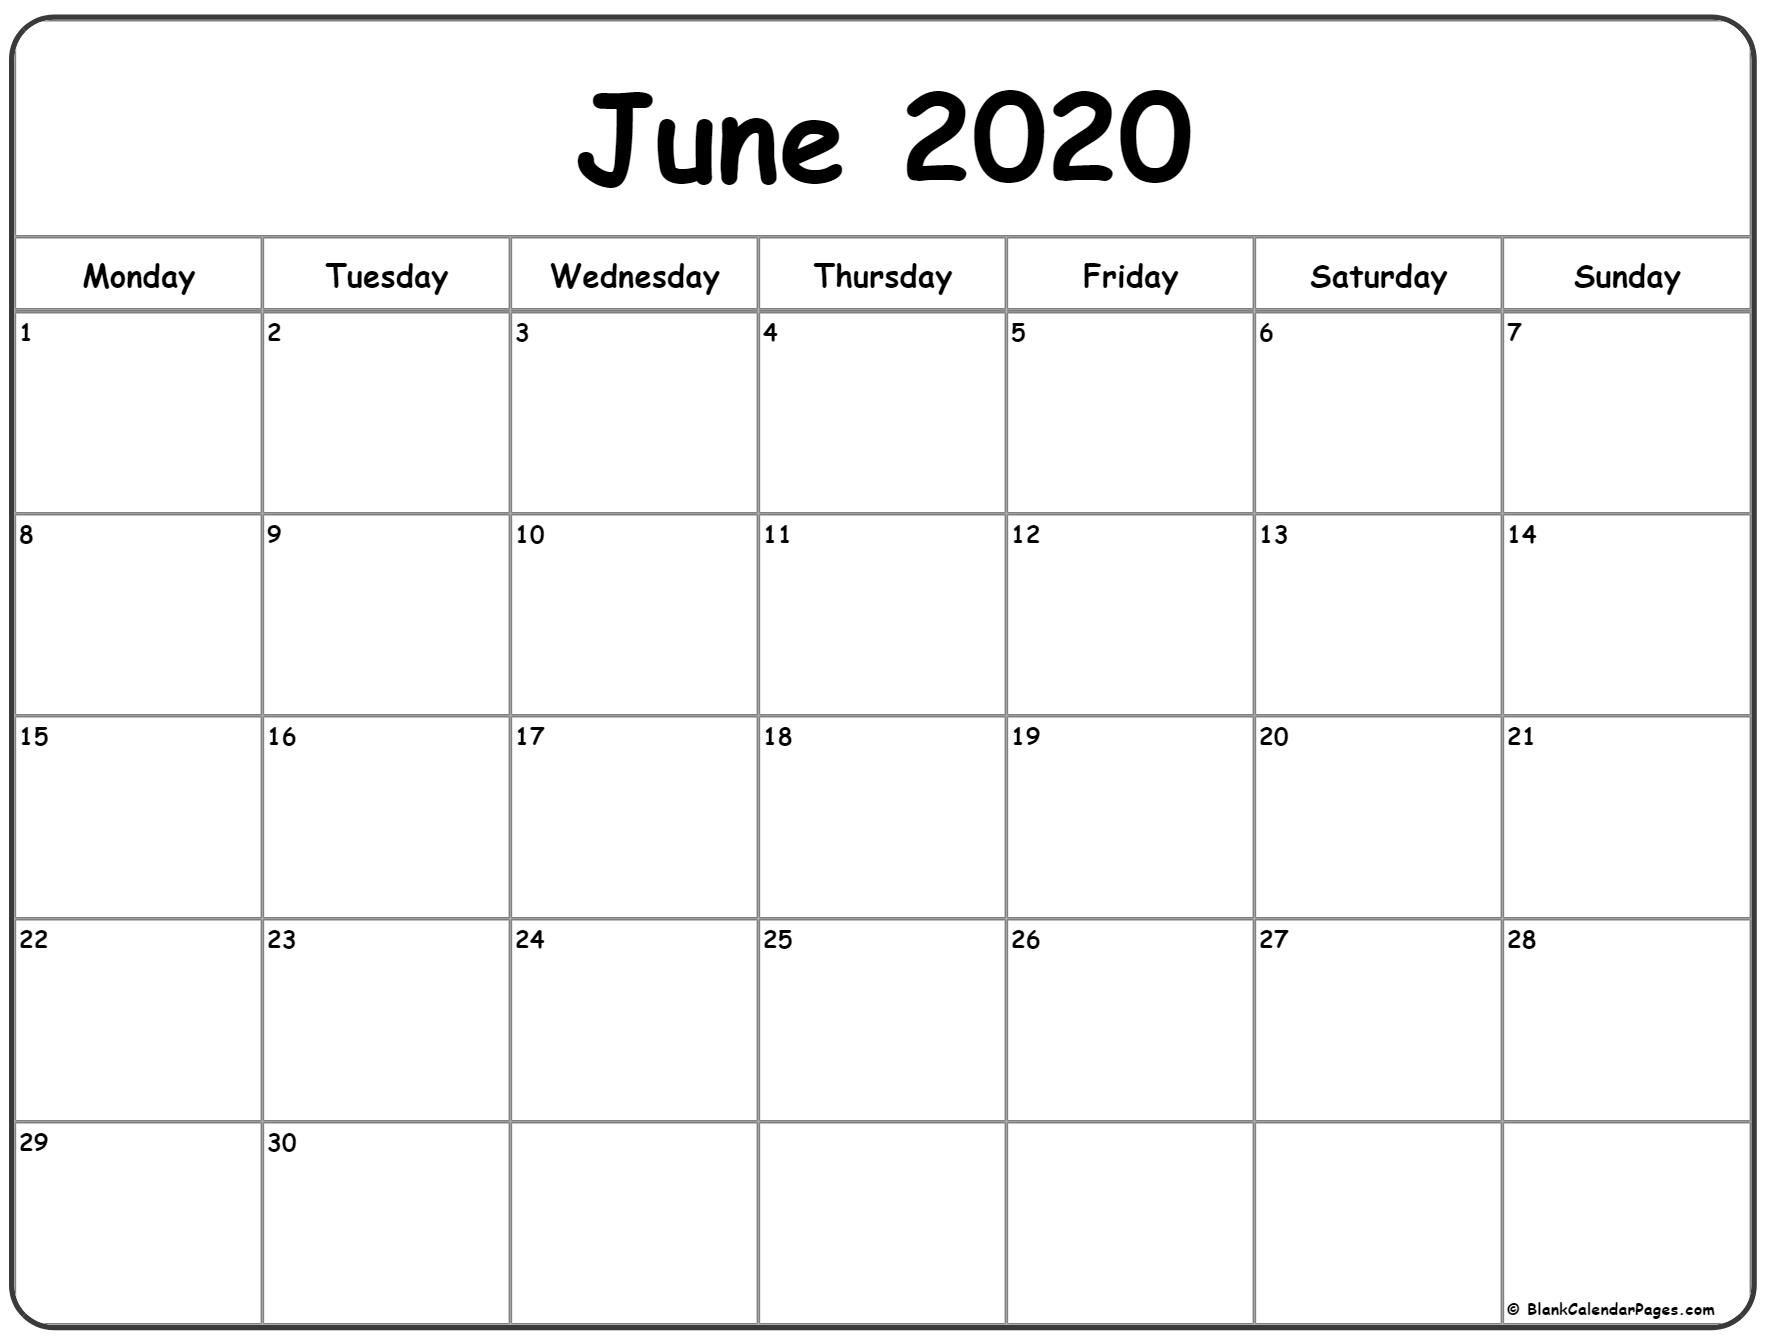 June 2020 Monday Calendar | Monday To Sunday